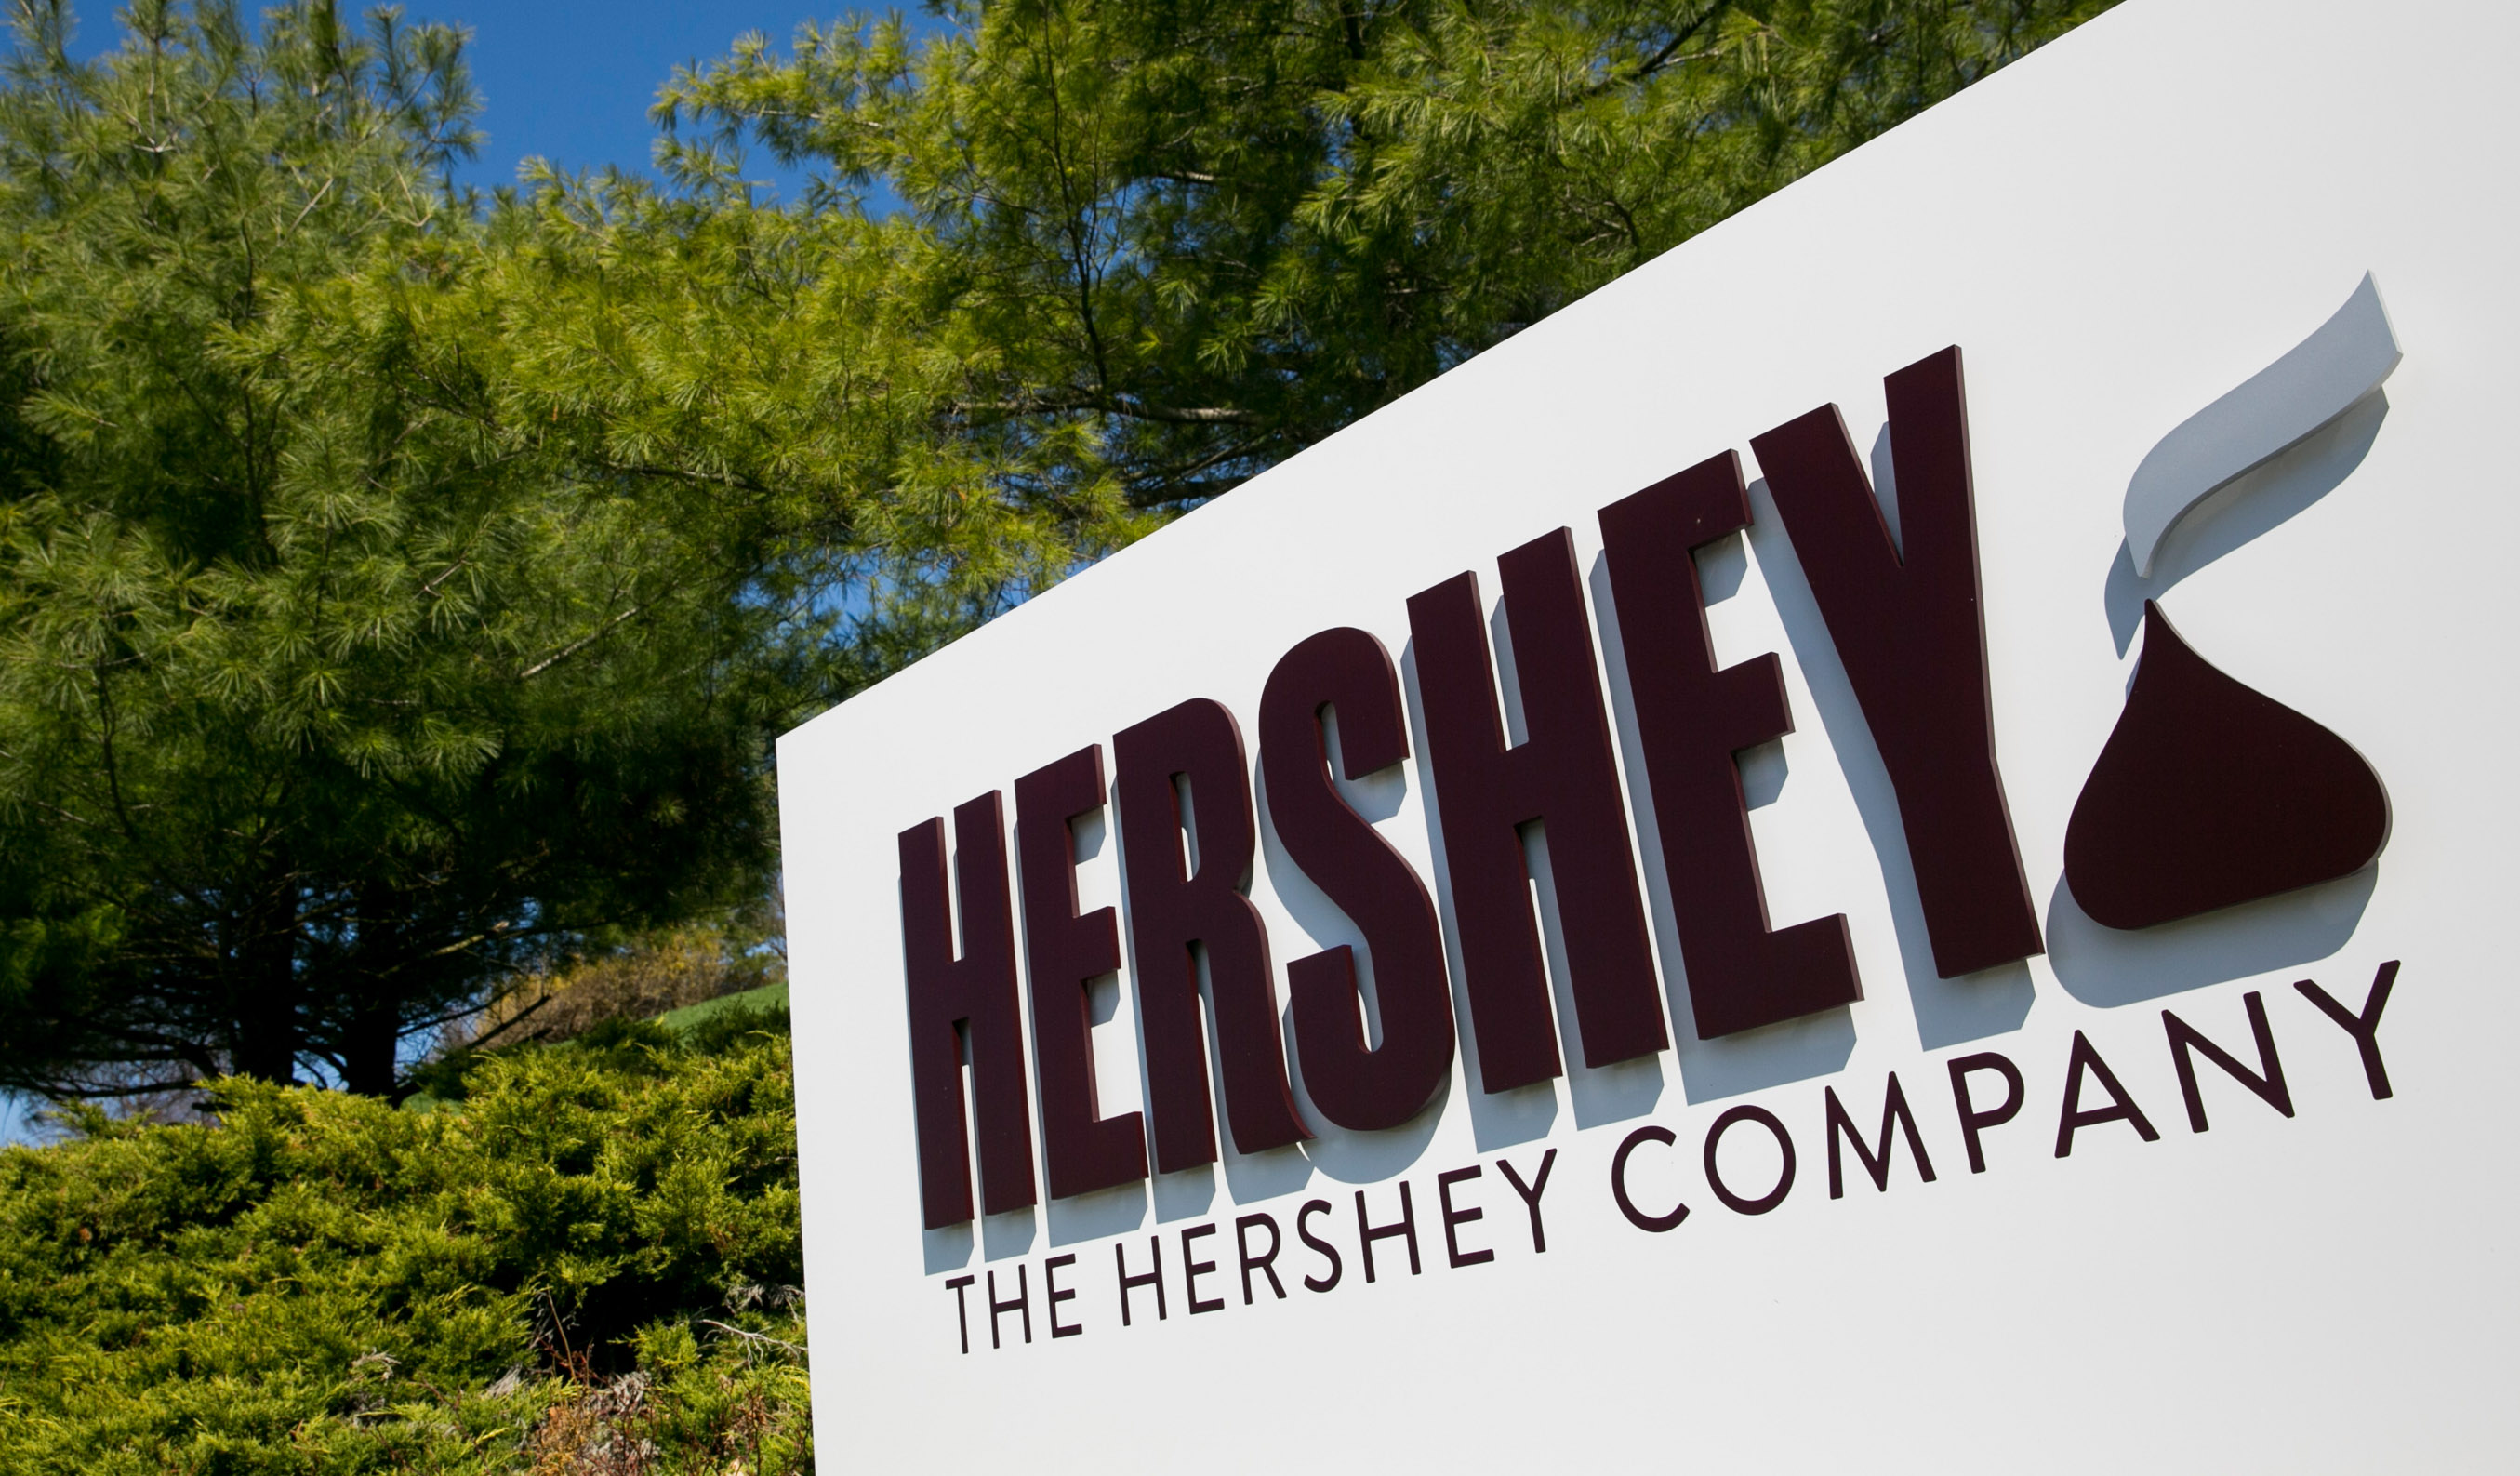 Hershey Company Corporate sign